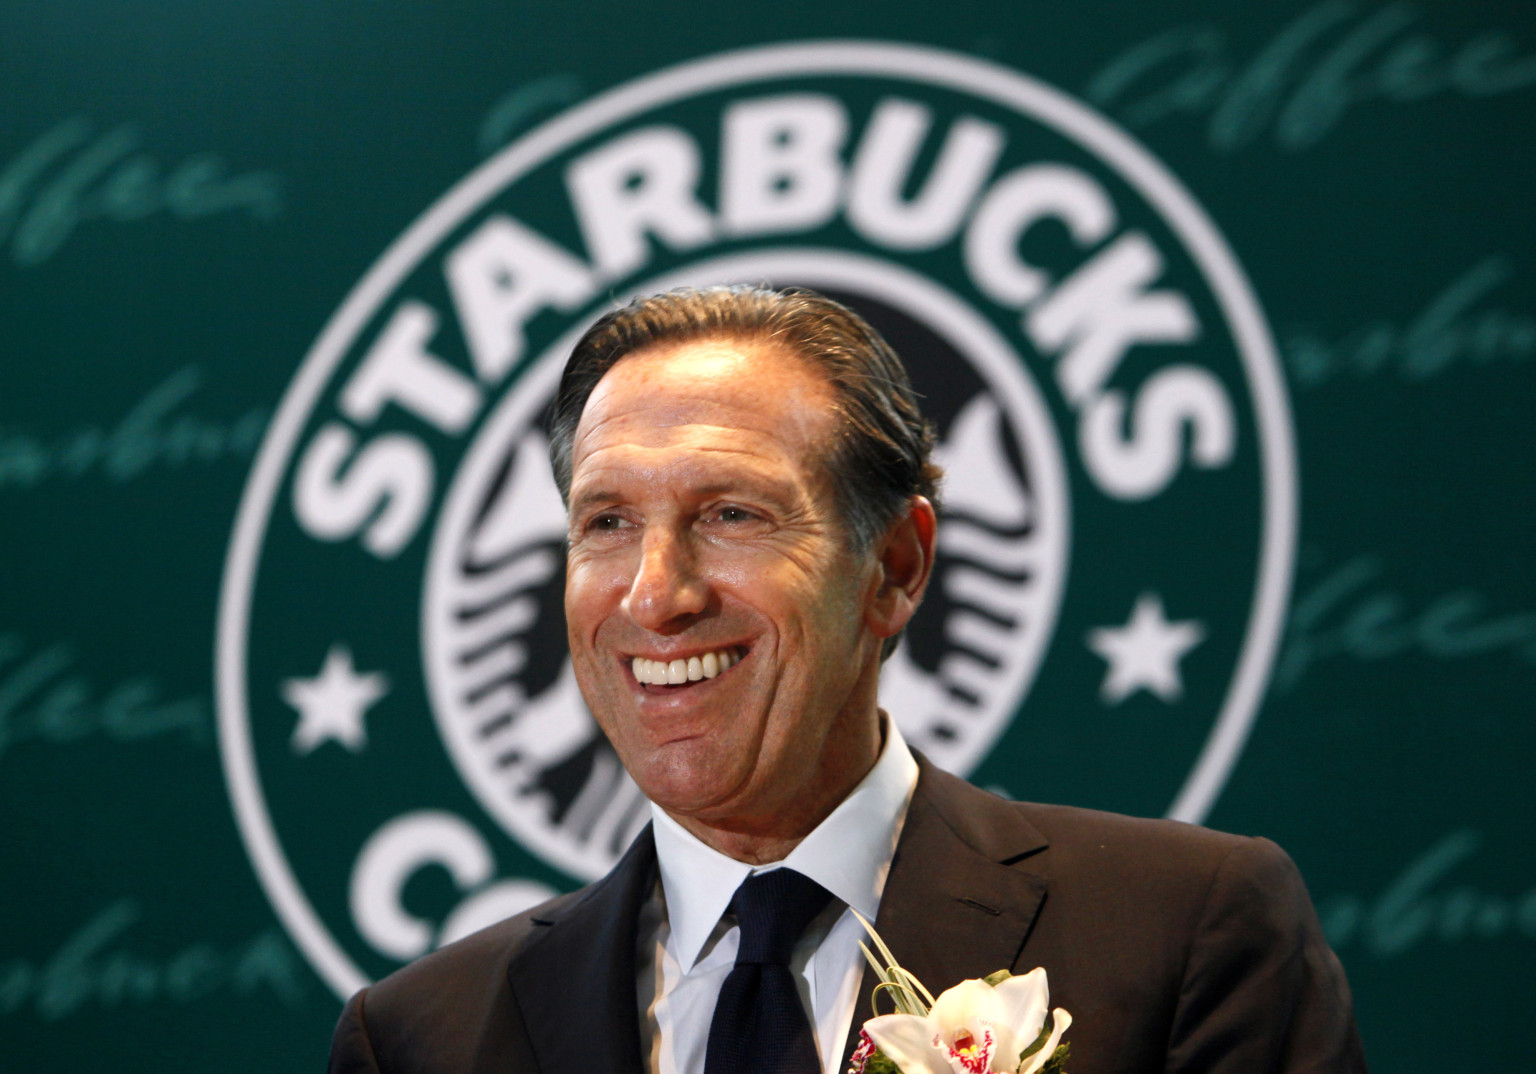 Starbucks and Howard Schultz Recognized for Leadership